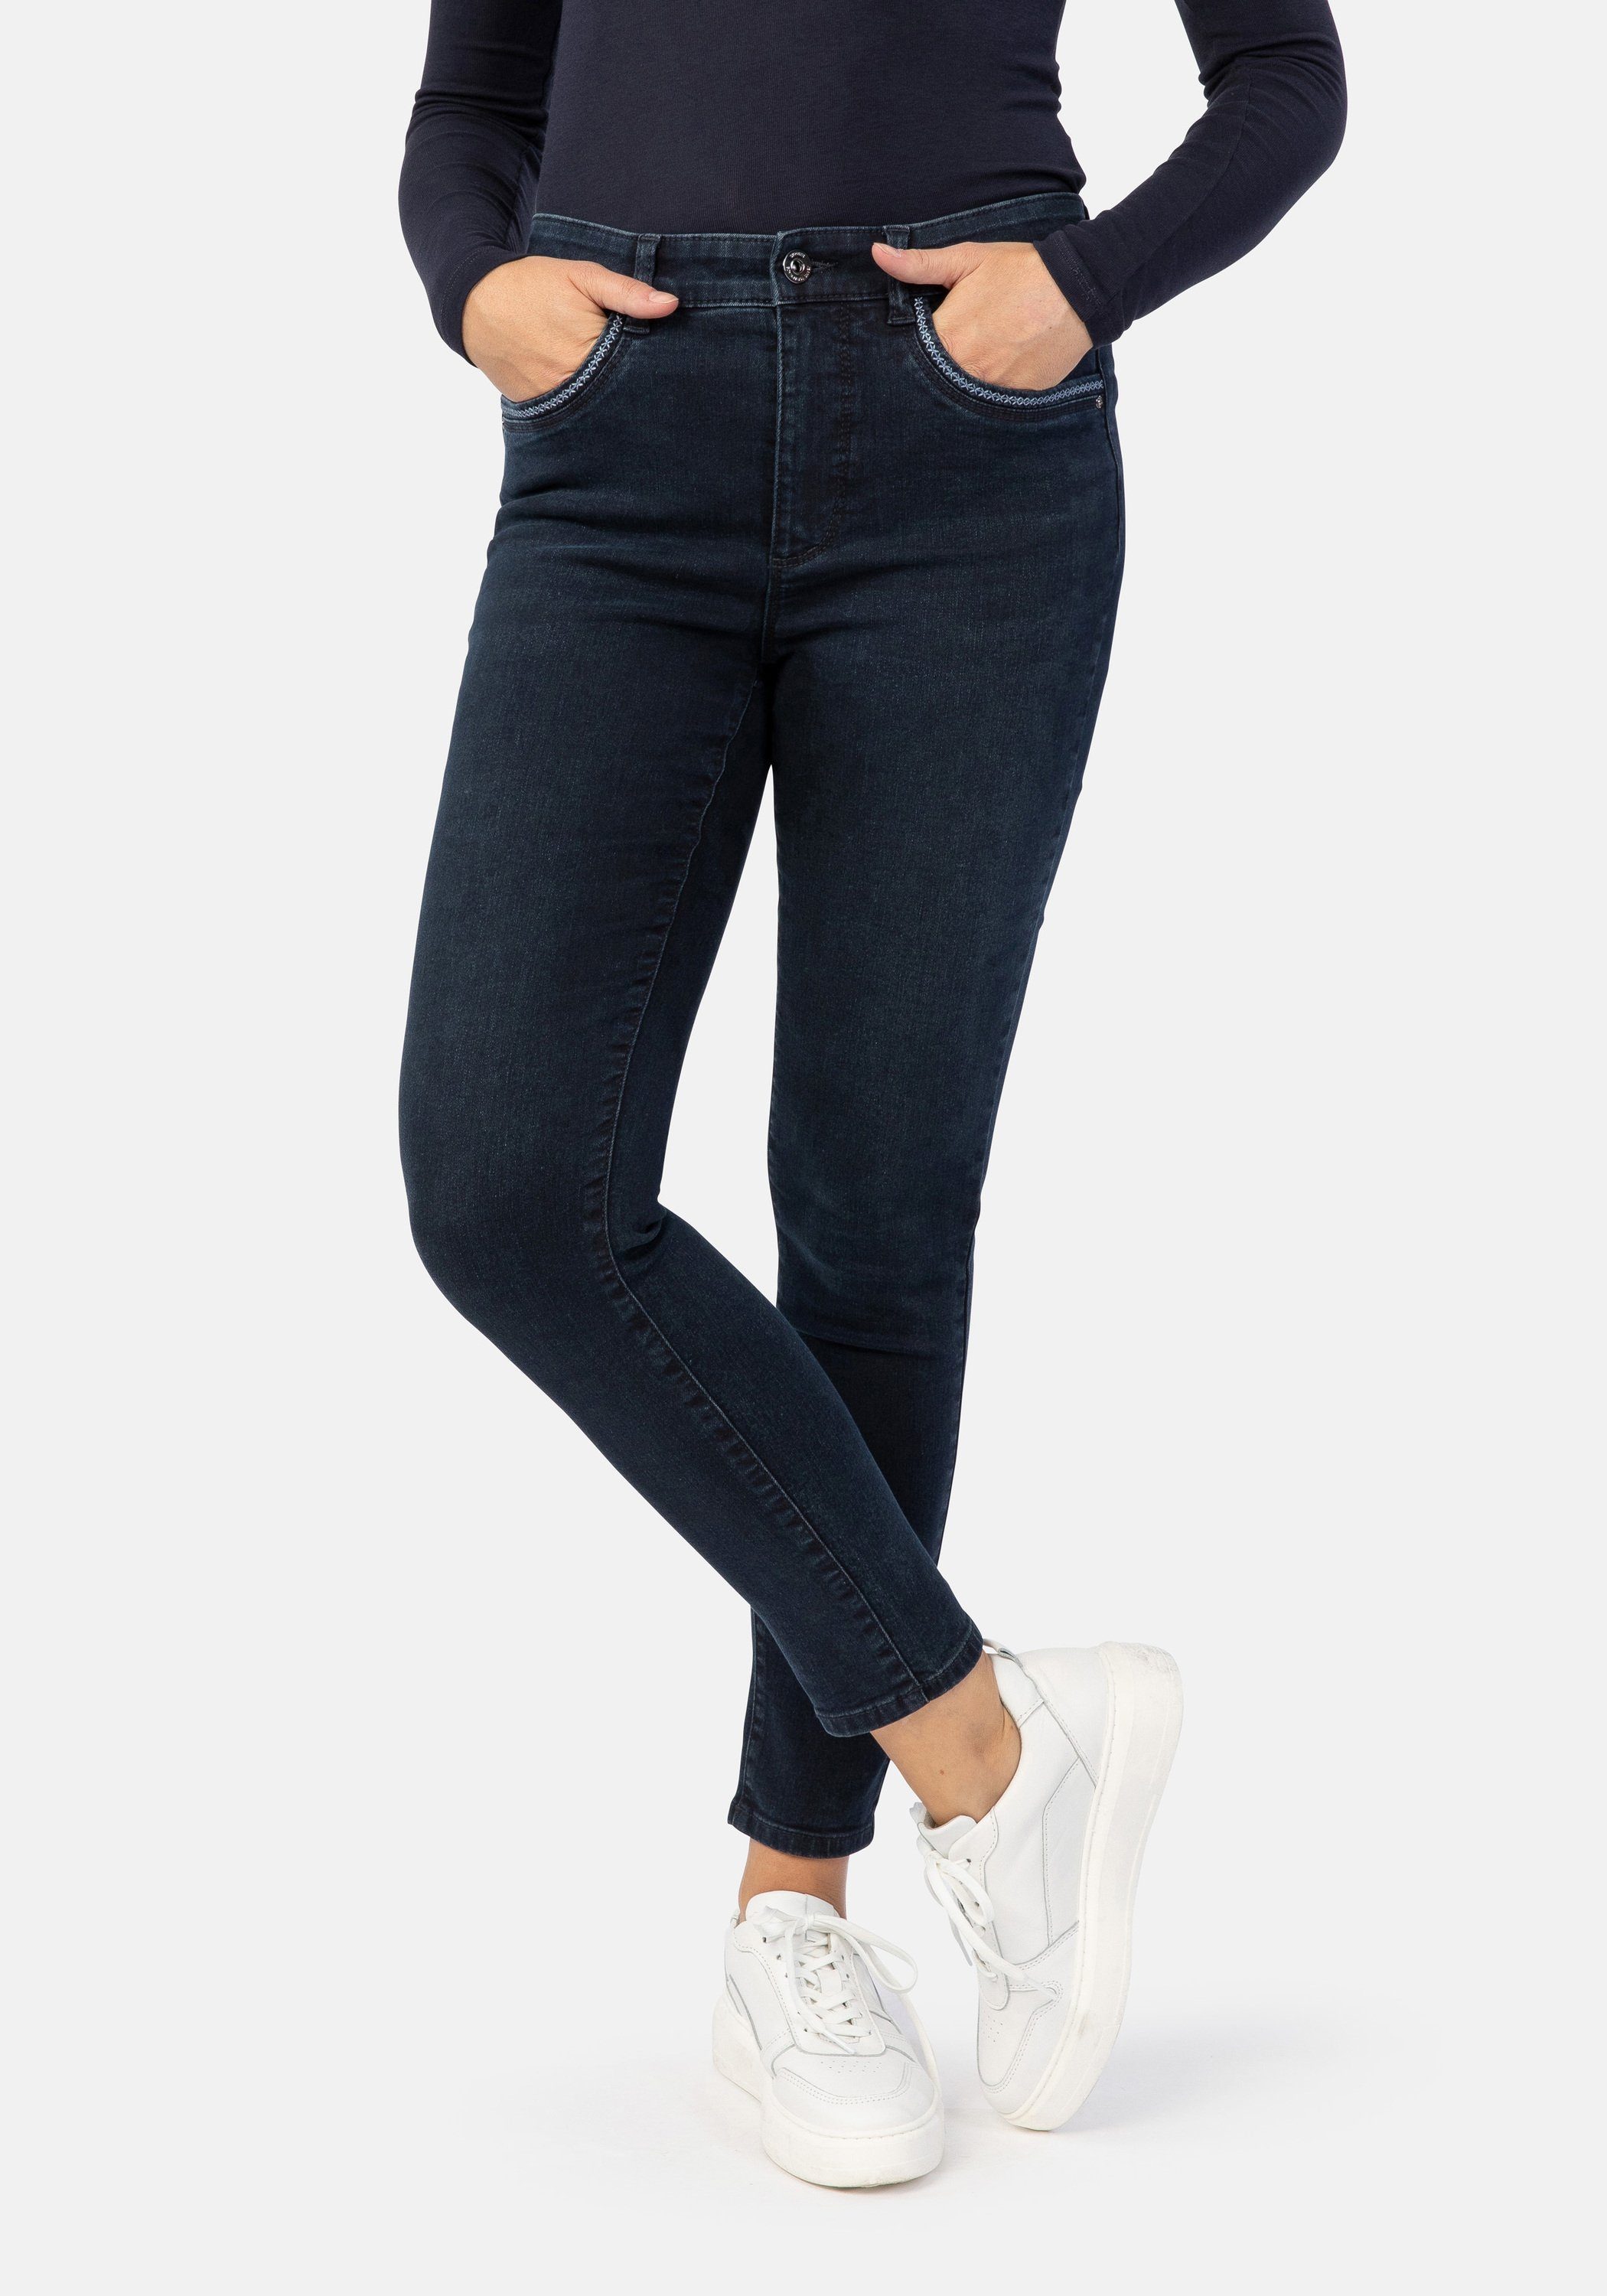 STOOKER WOMEN 5-Pocket-Jeans Rio Fexxi Move Denim Skinny Fit authentic indigo wash